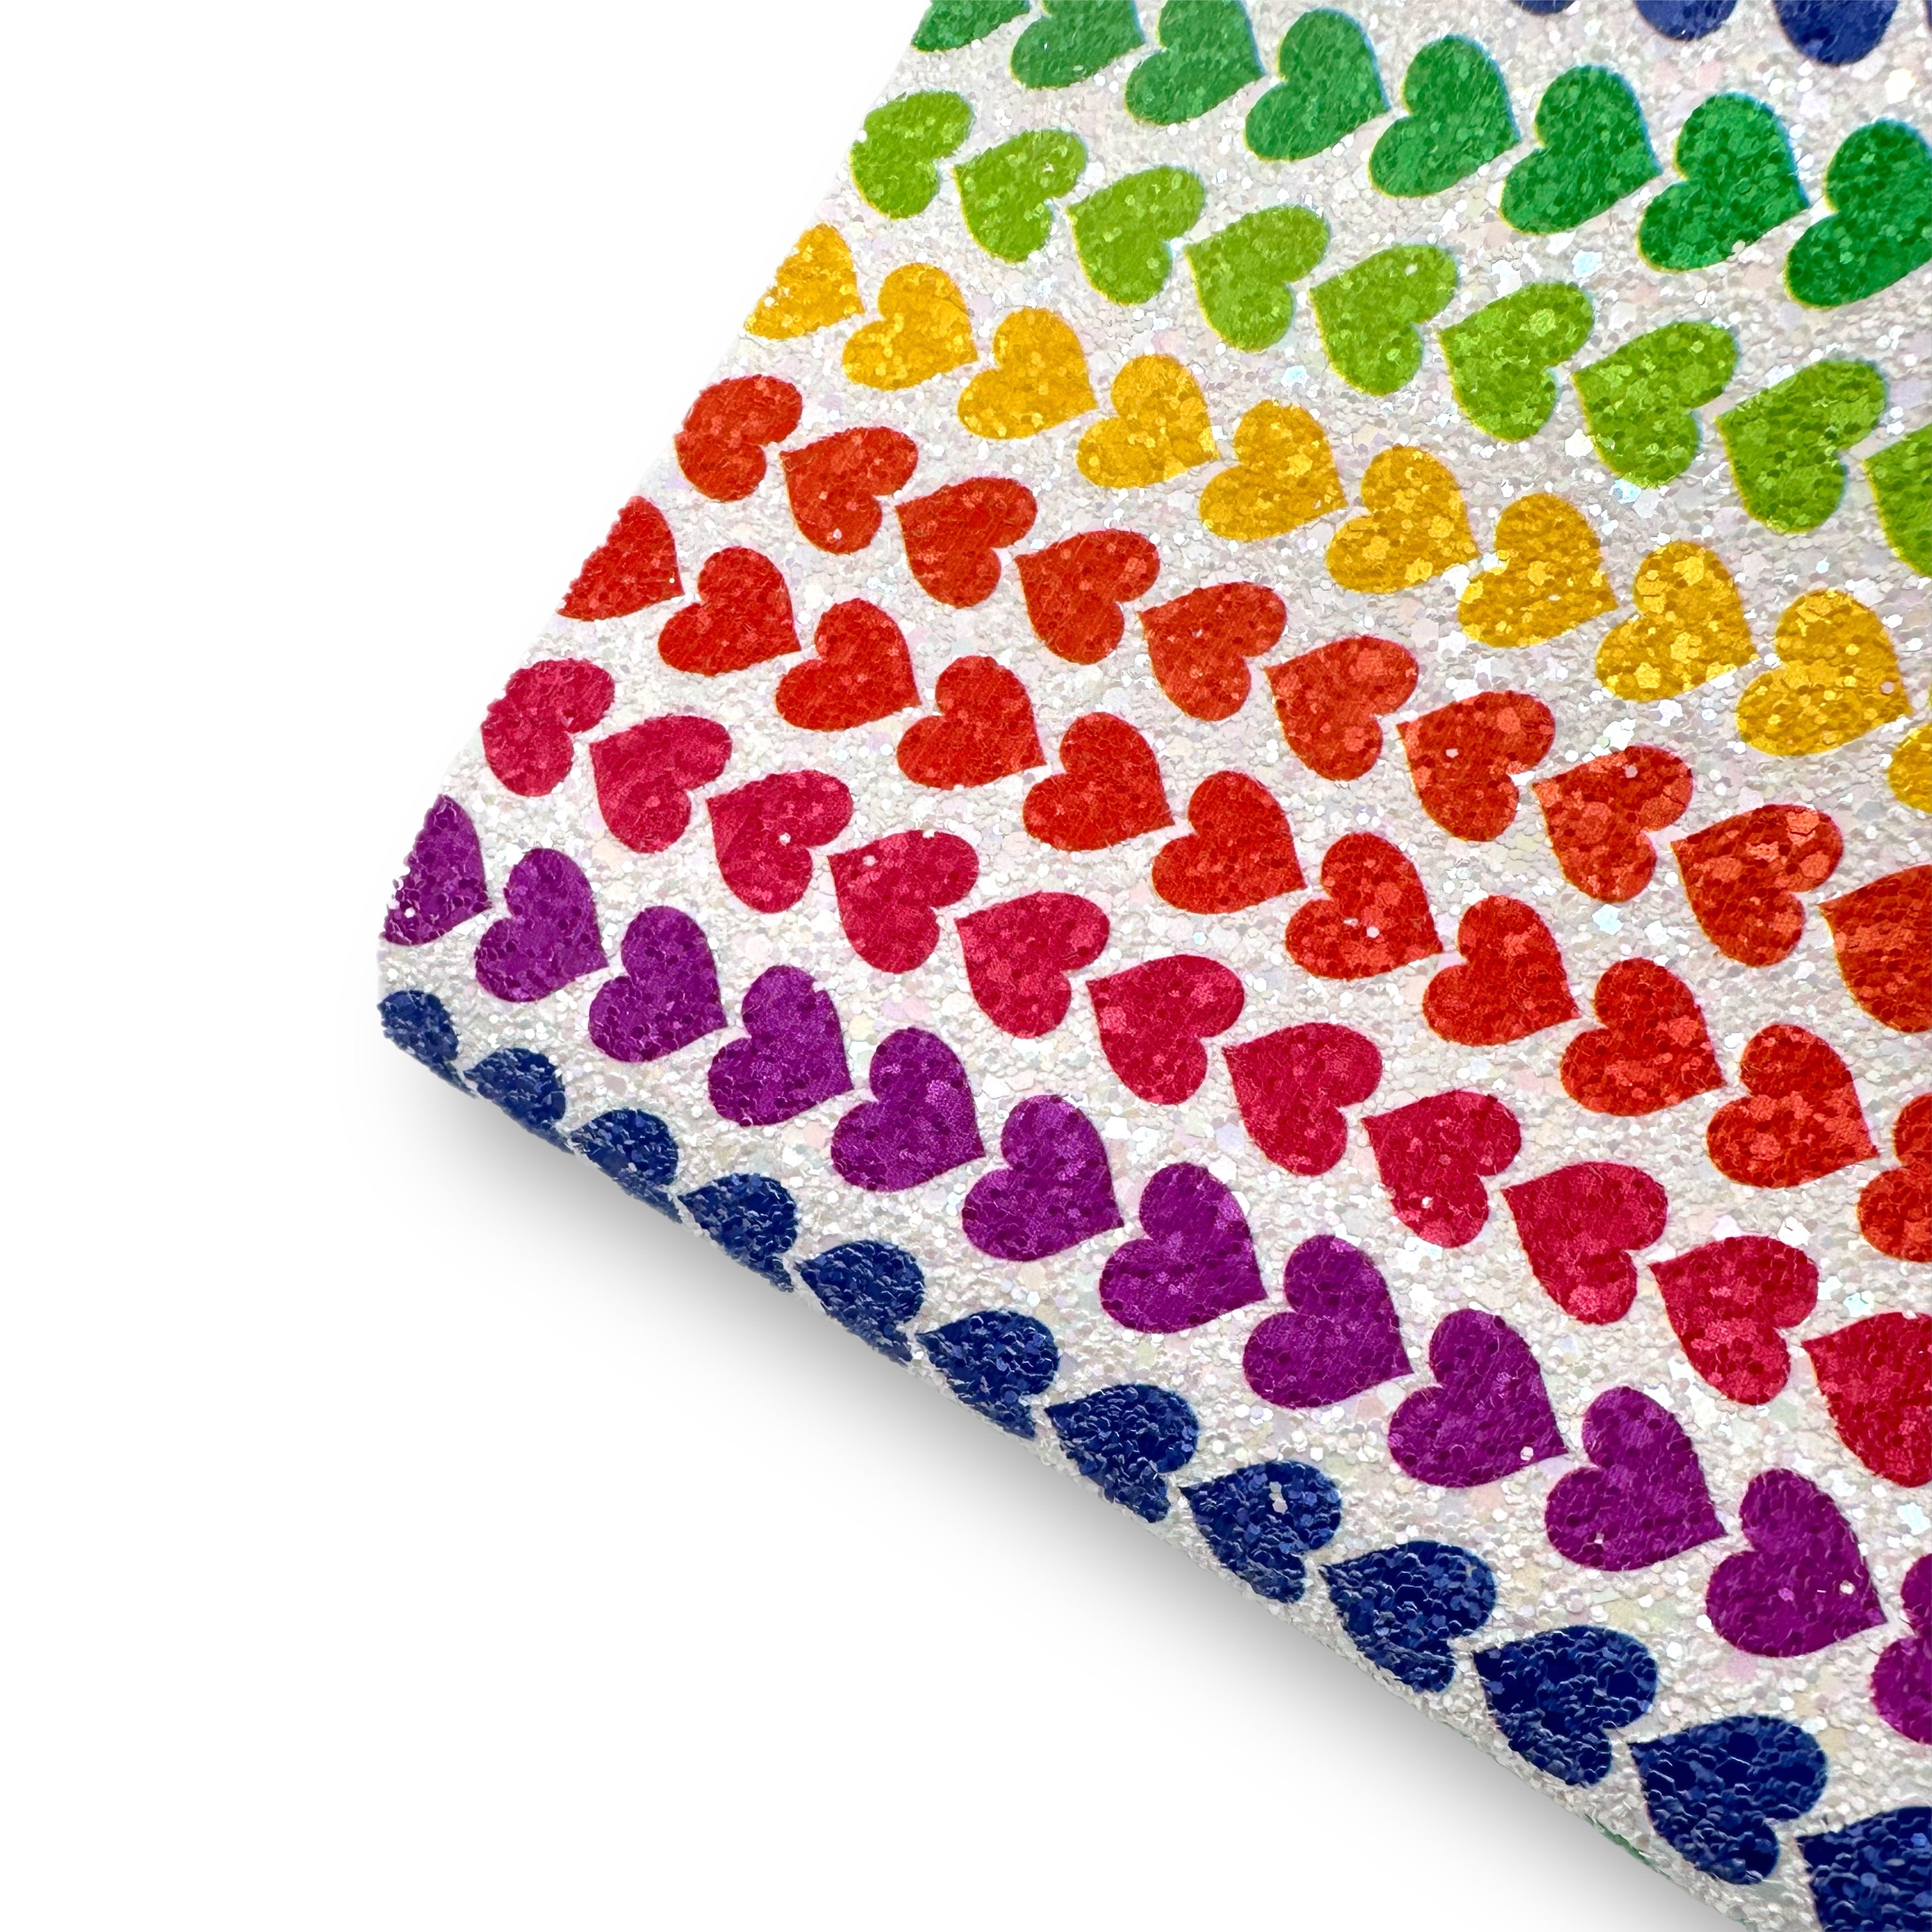 Glitter Fabric - Chunky & Fine Glitters in a Huge Range of Colours